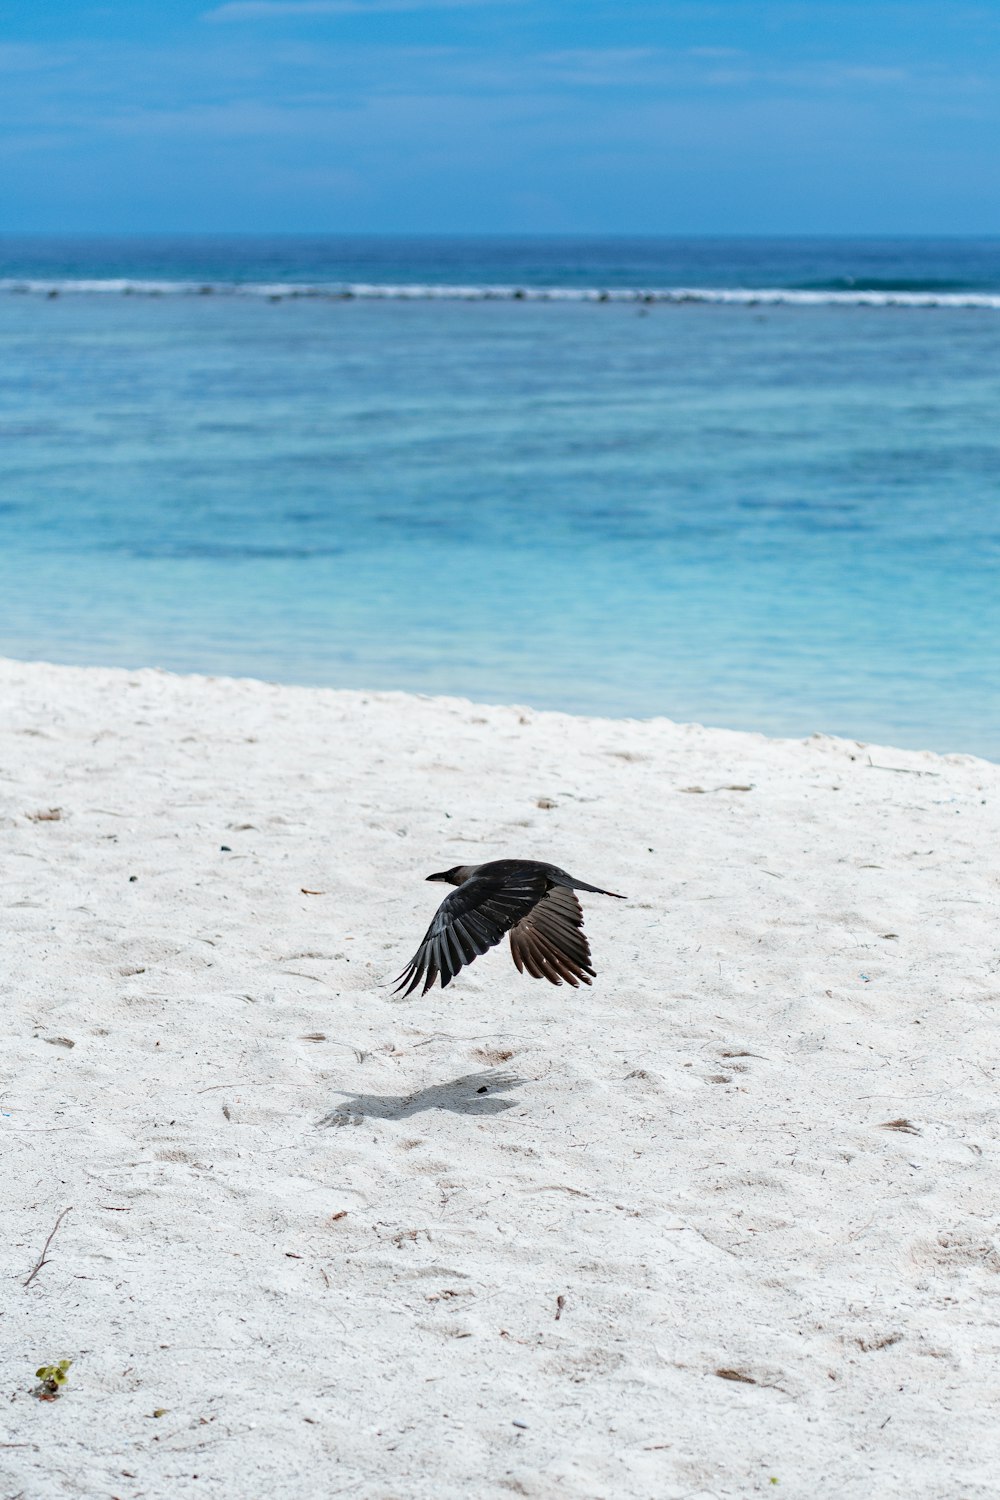 black bird on white sand near body of water during daytime